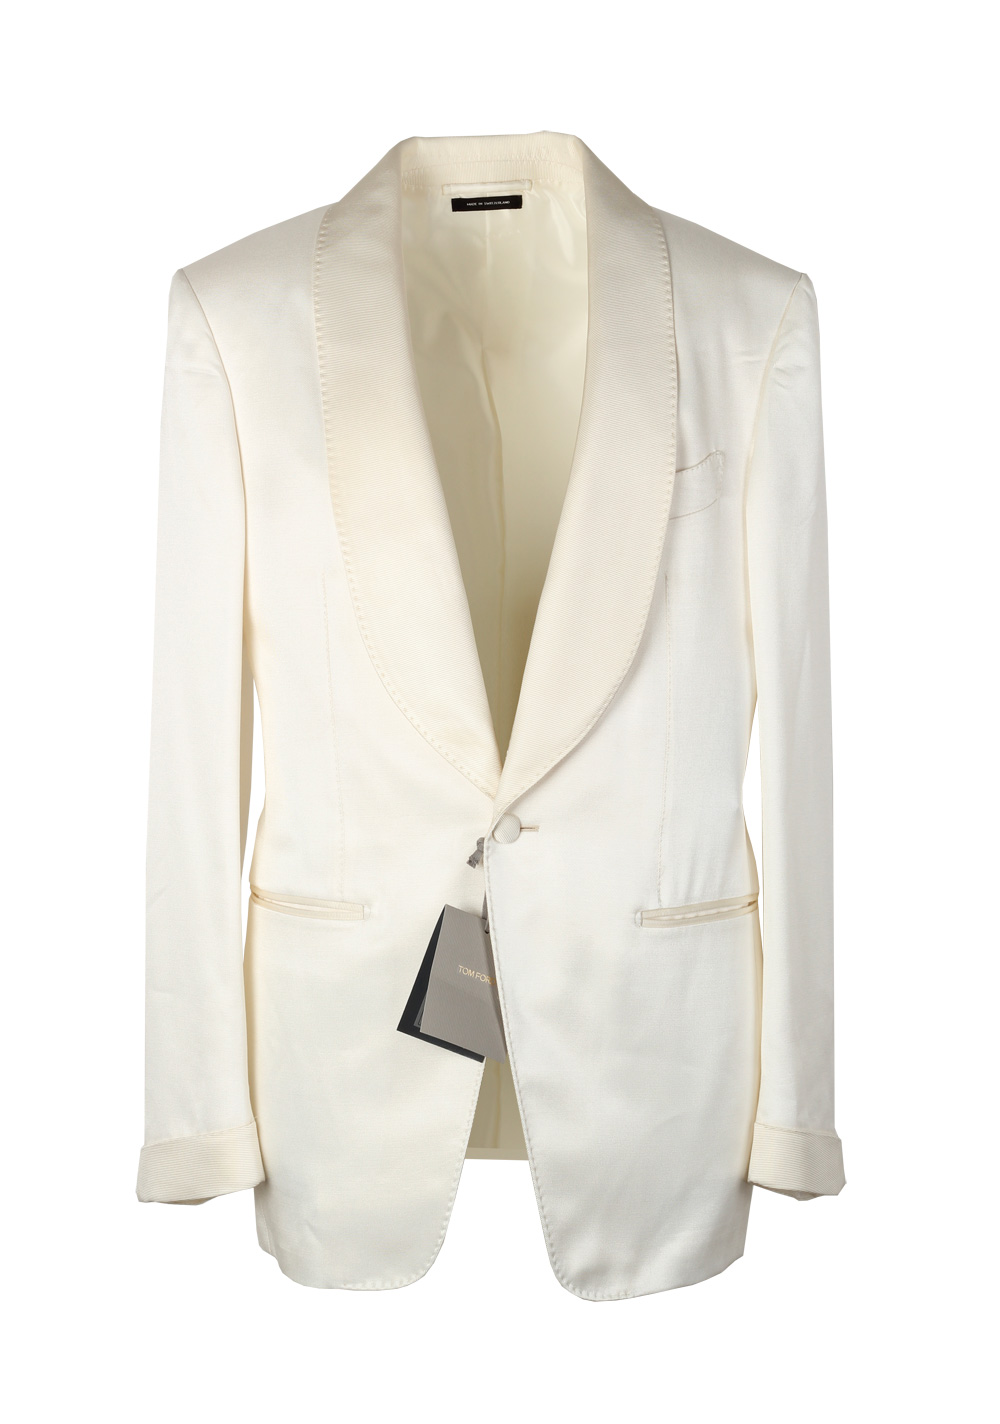 TOM FORD Shelton Shawl Collar Off White Sport Coat Tuxedo Dinner Jacket  Size 46 / 36R .